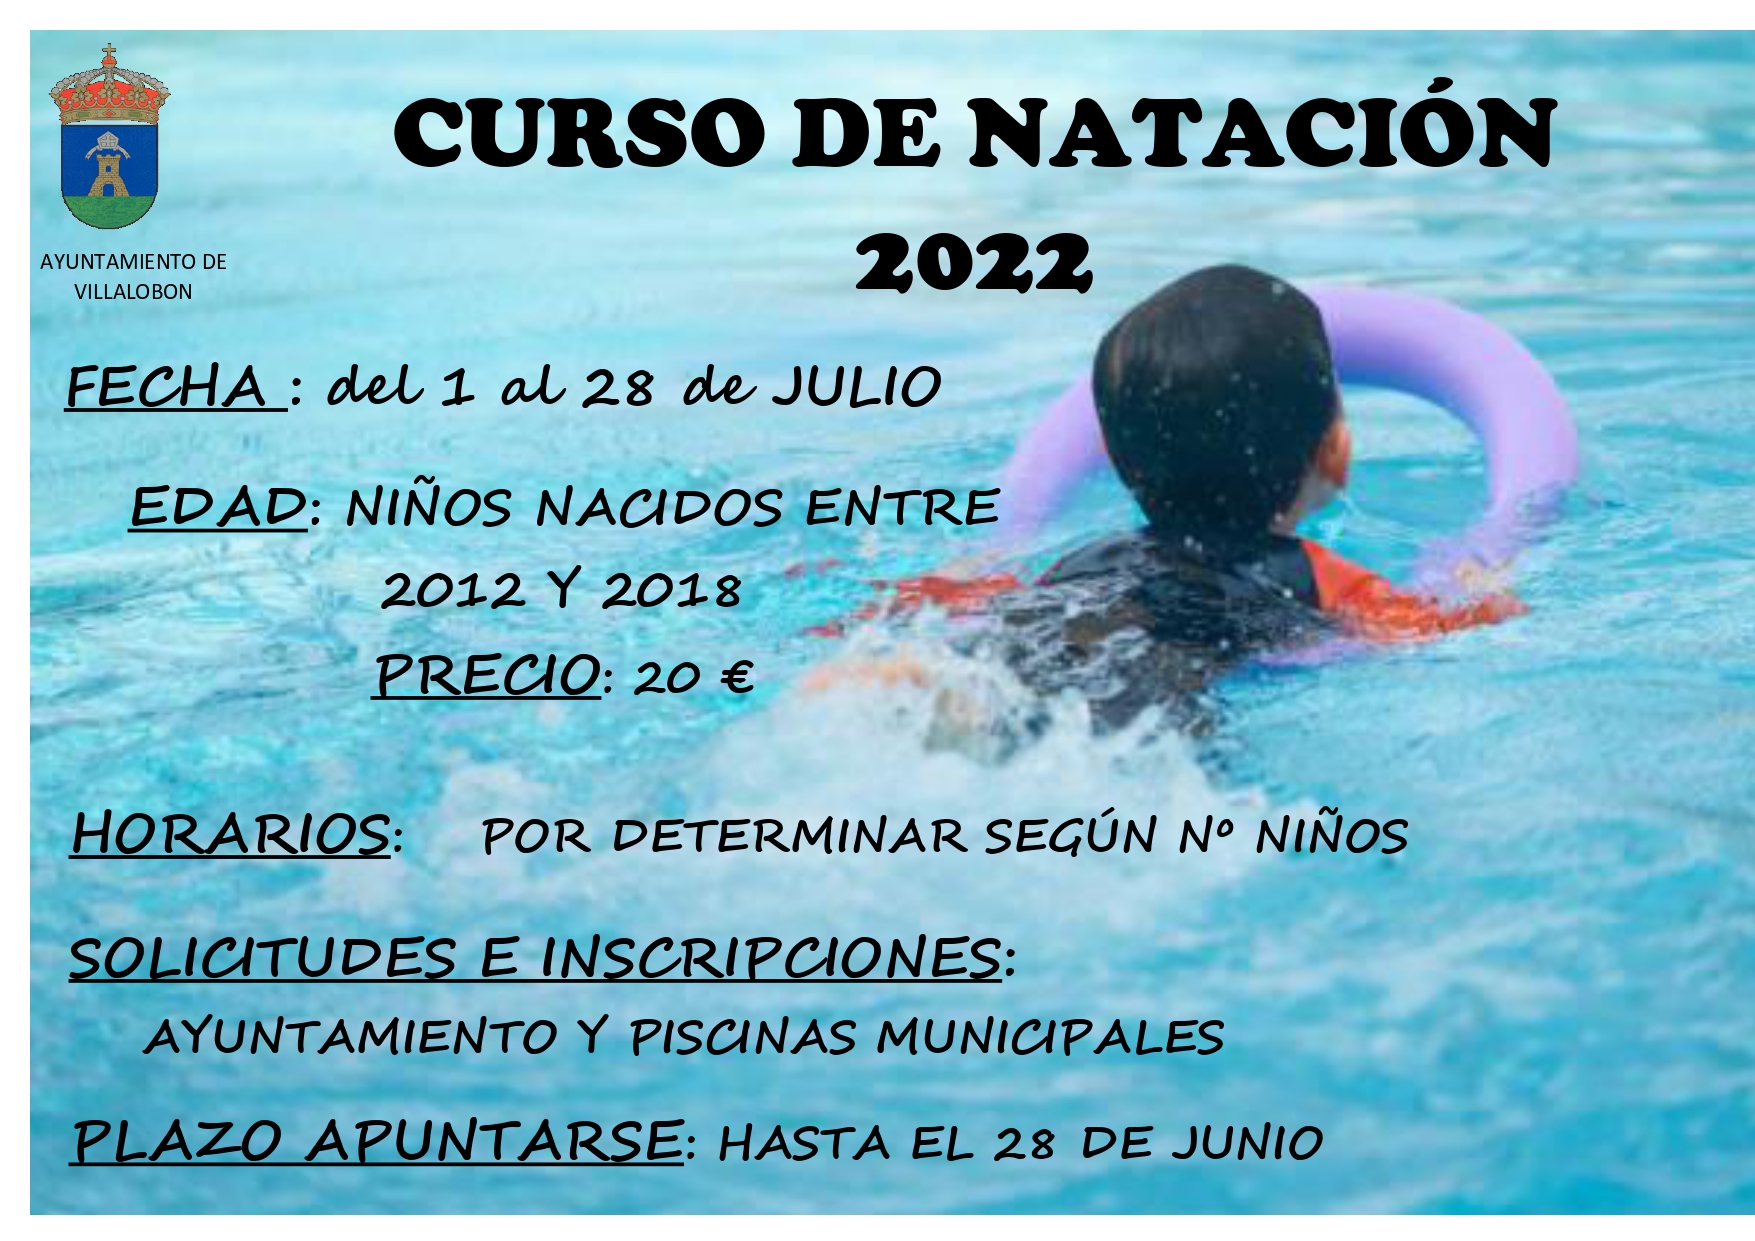 CURSO DE NATACION 2022